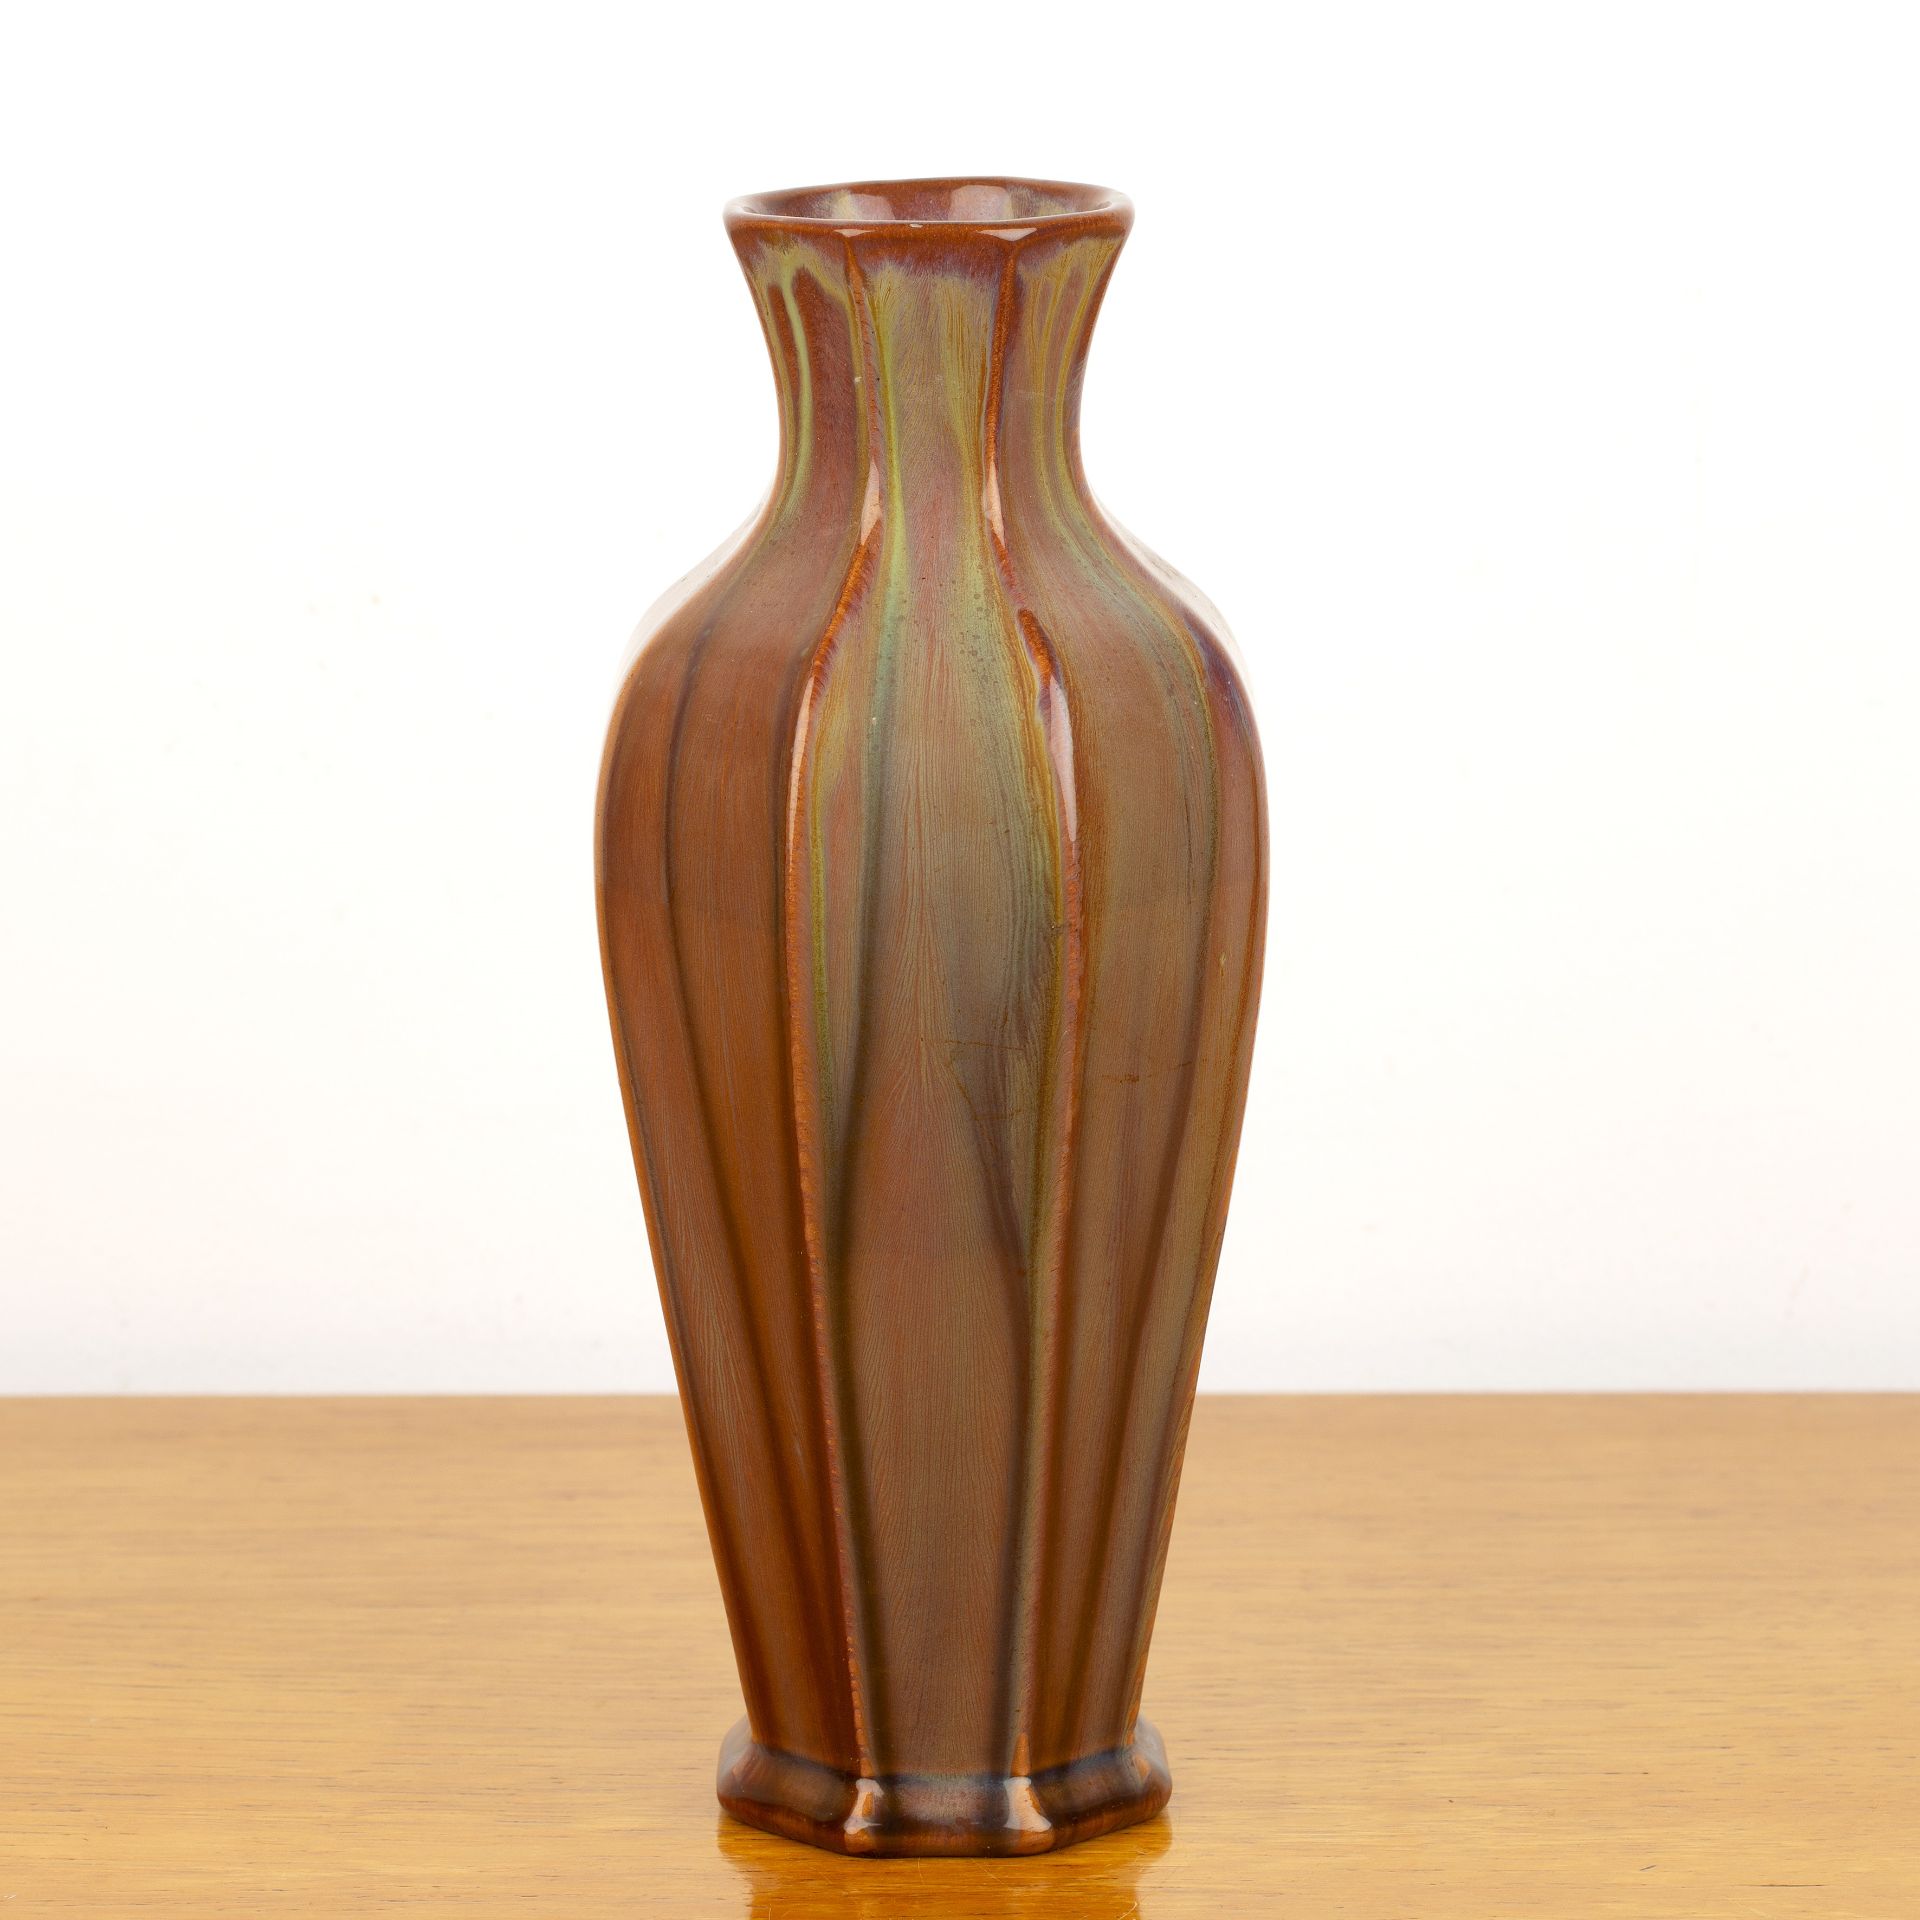 Pilkington's Royal Lancastrian Pottery baluster vase, with running lustre glaze, blue glaze to the